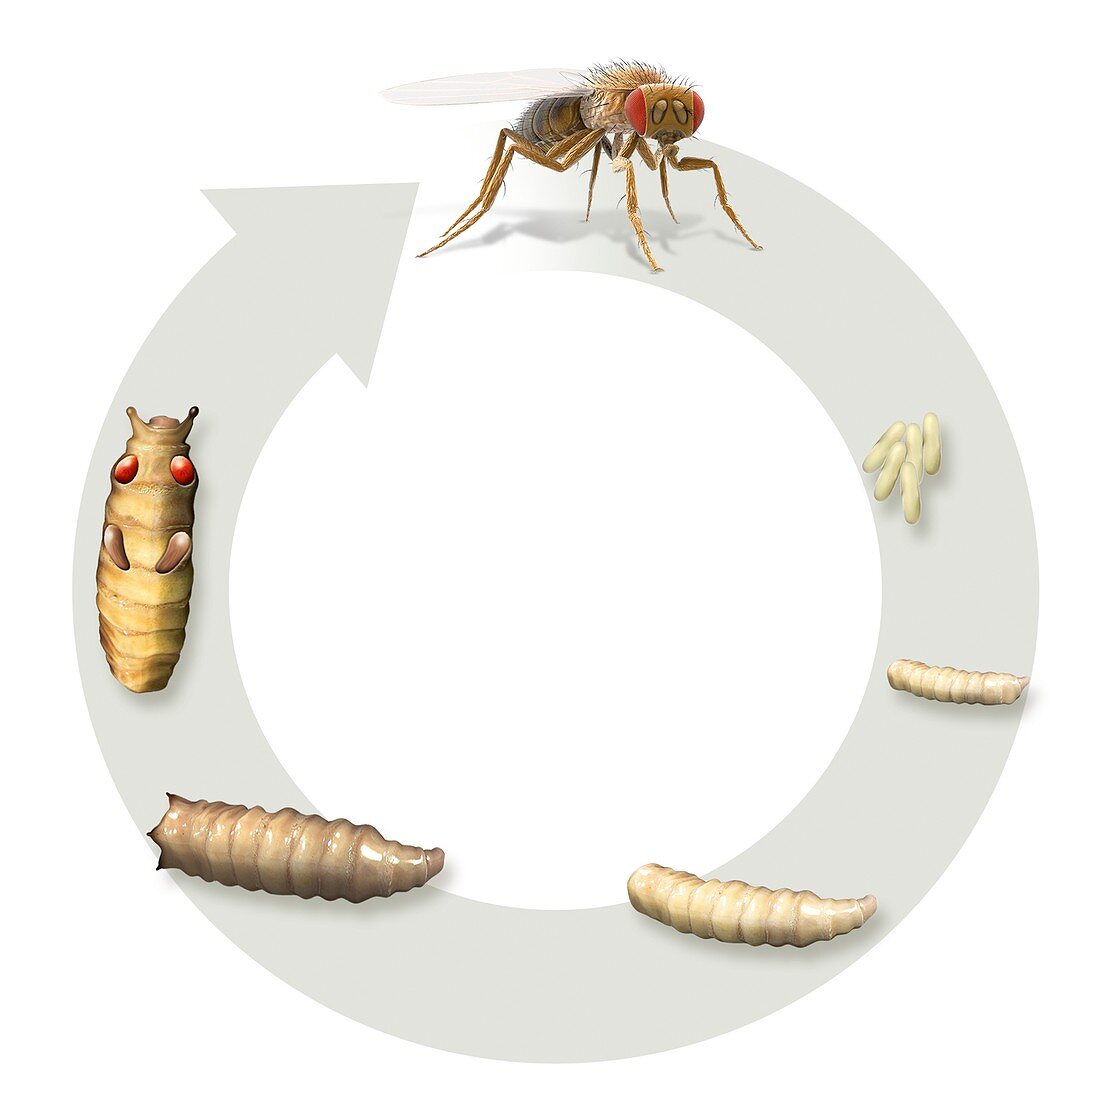 Fruit fly life-cycle,illustration